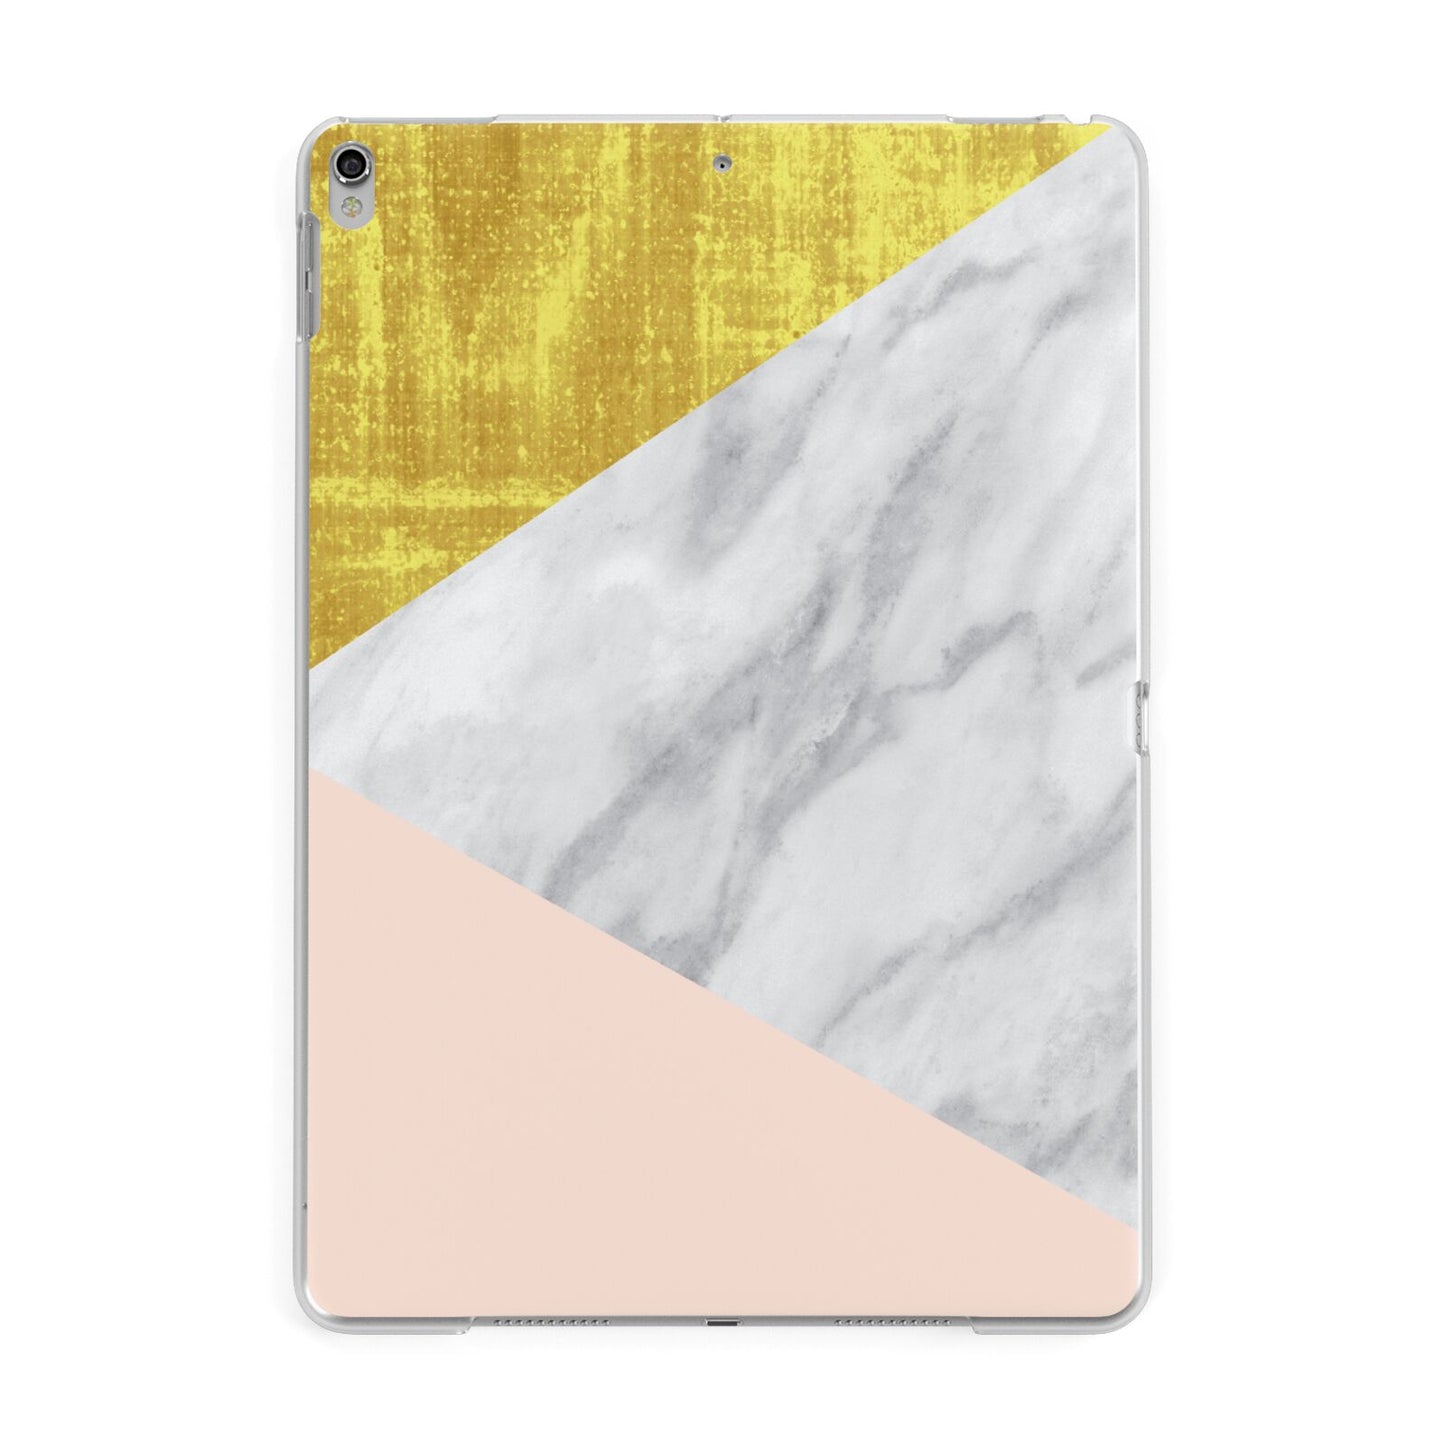 Marble White Gold Foil Peach Apple iPad Silver Case